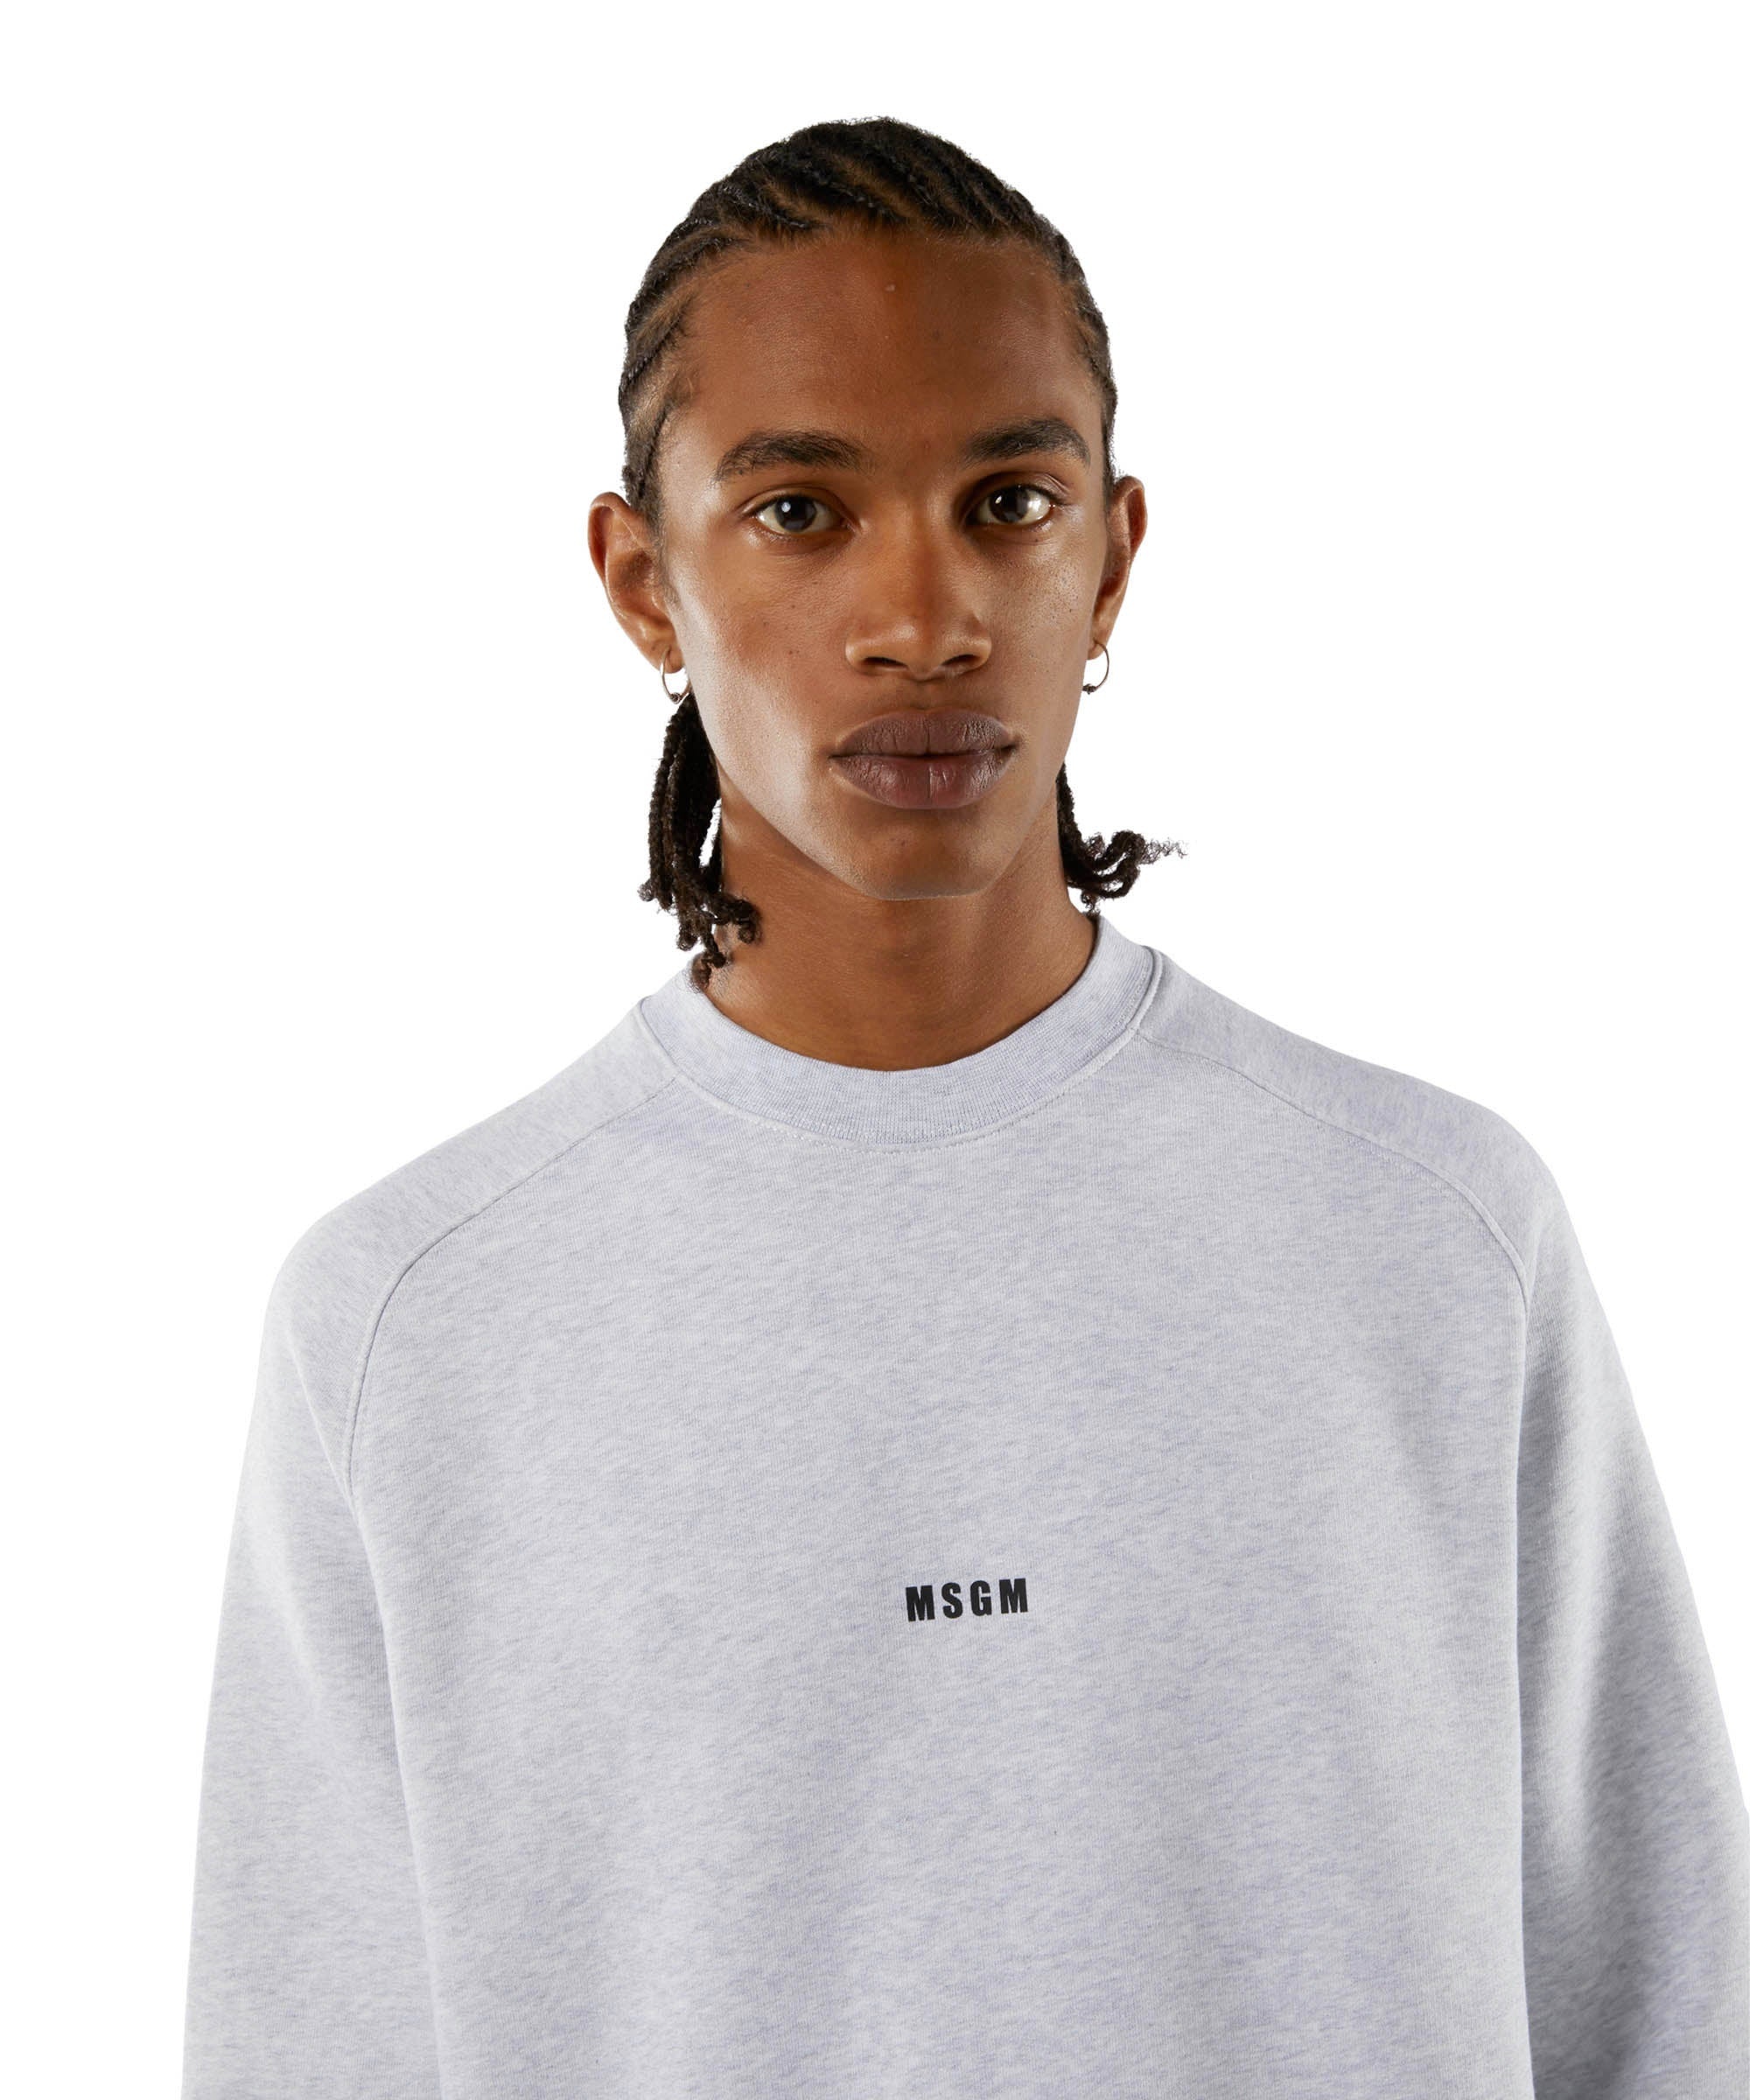 Crew neck cotton sweatshirt with a micro logo - 5